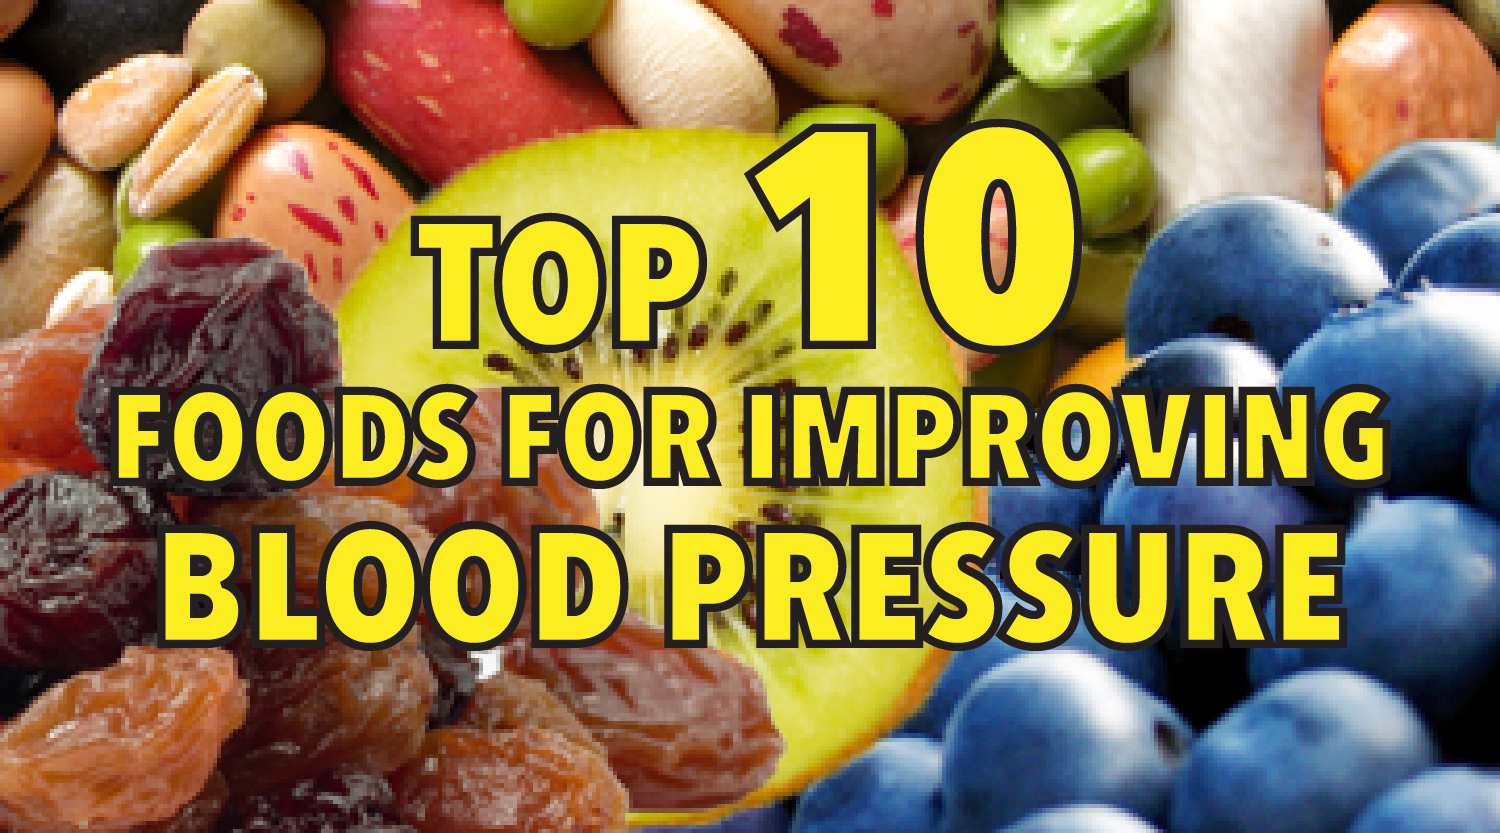 Top 10 foods for improving blood pressure